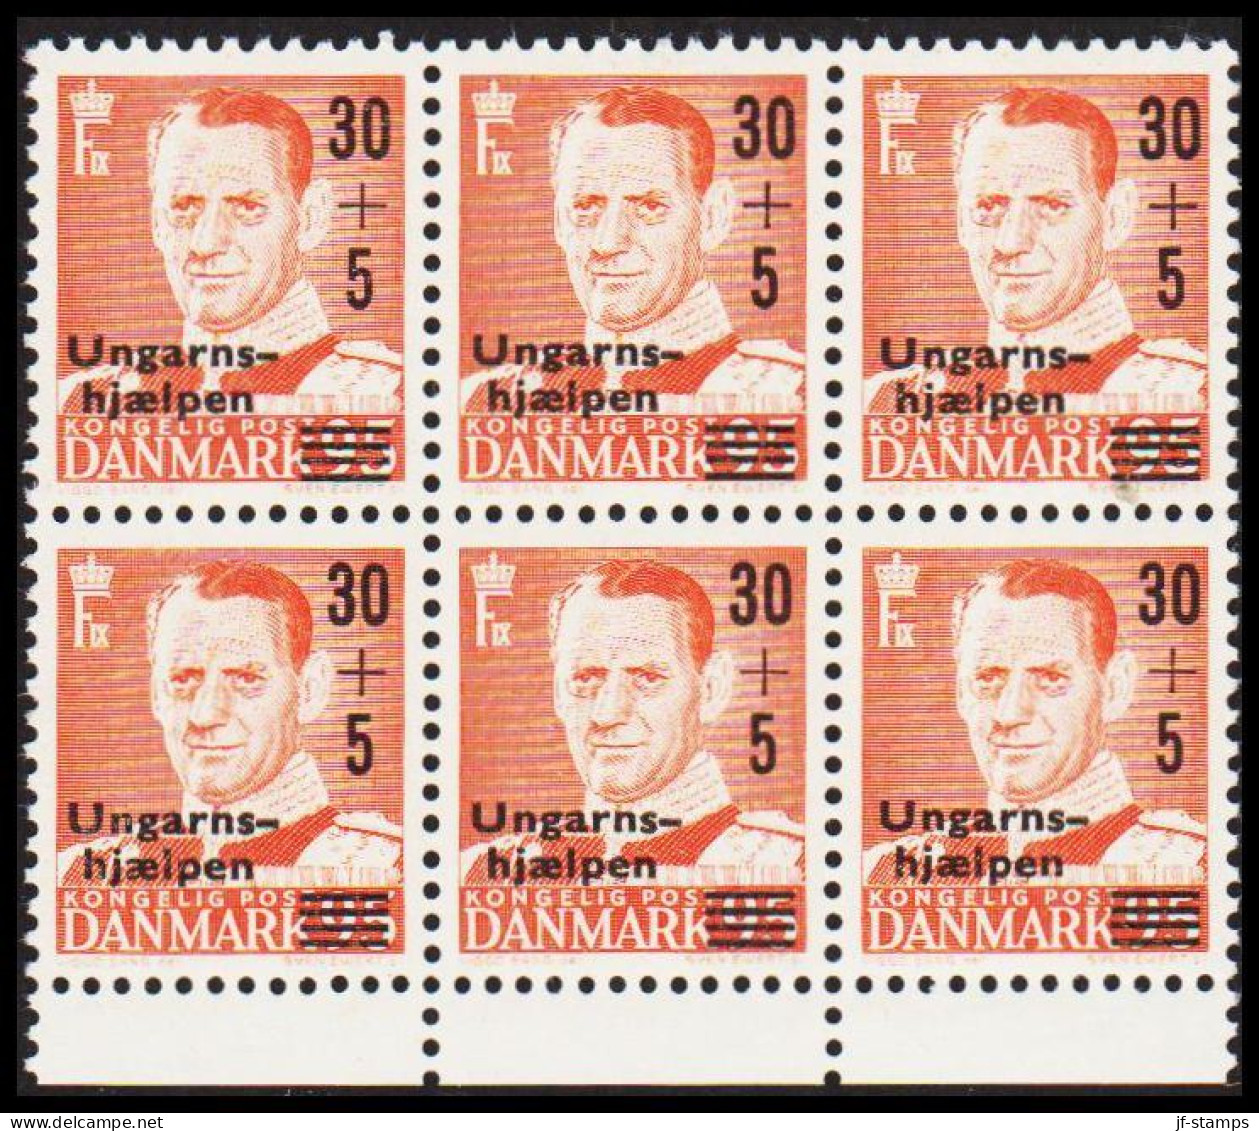 1957. DANMARK. 30+5 Ungarnshjælpen On 95 øre Frederik IX In Never Hinged 6-block. (Michel 366) - JF540693 - Storia Postale